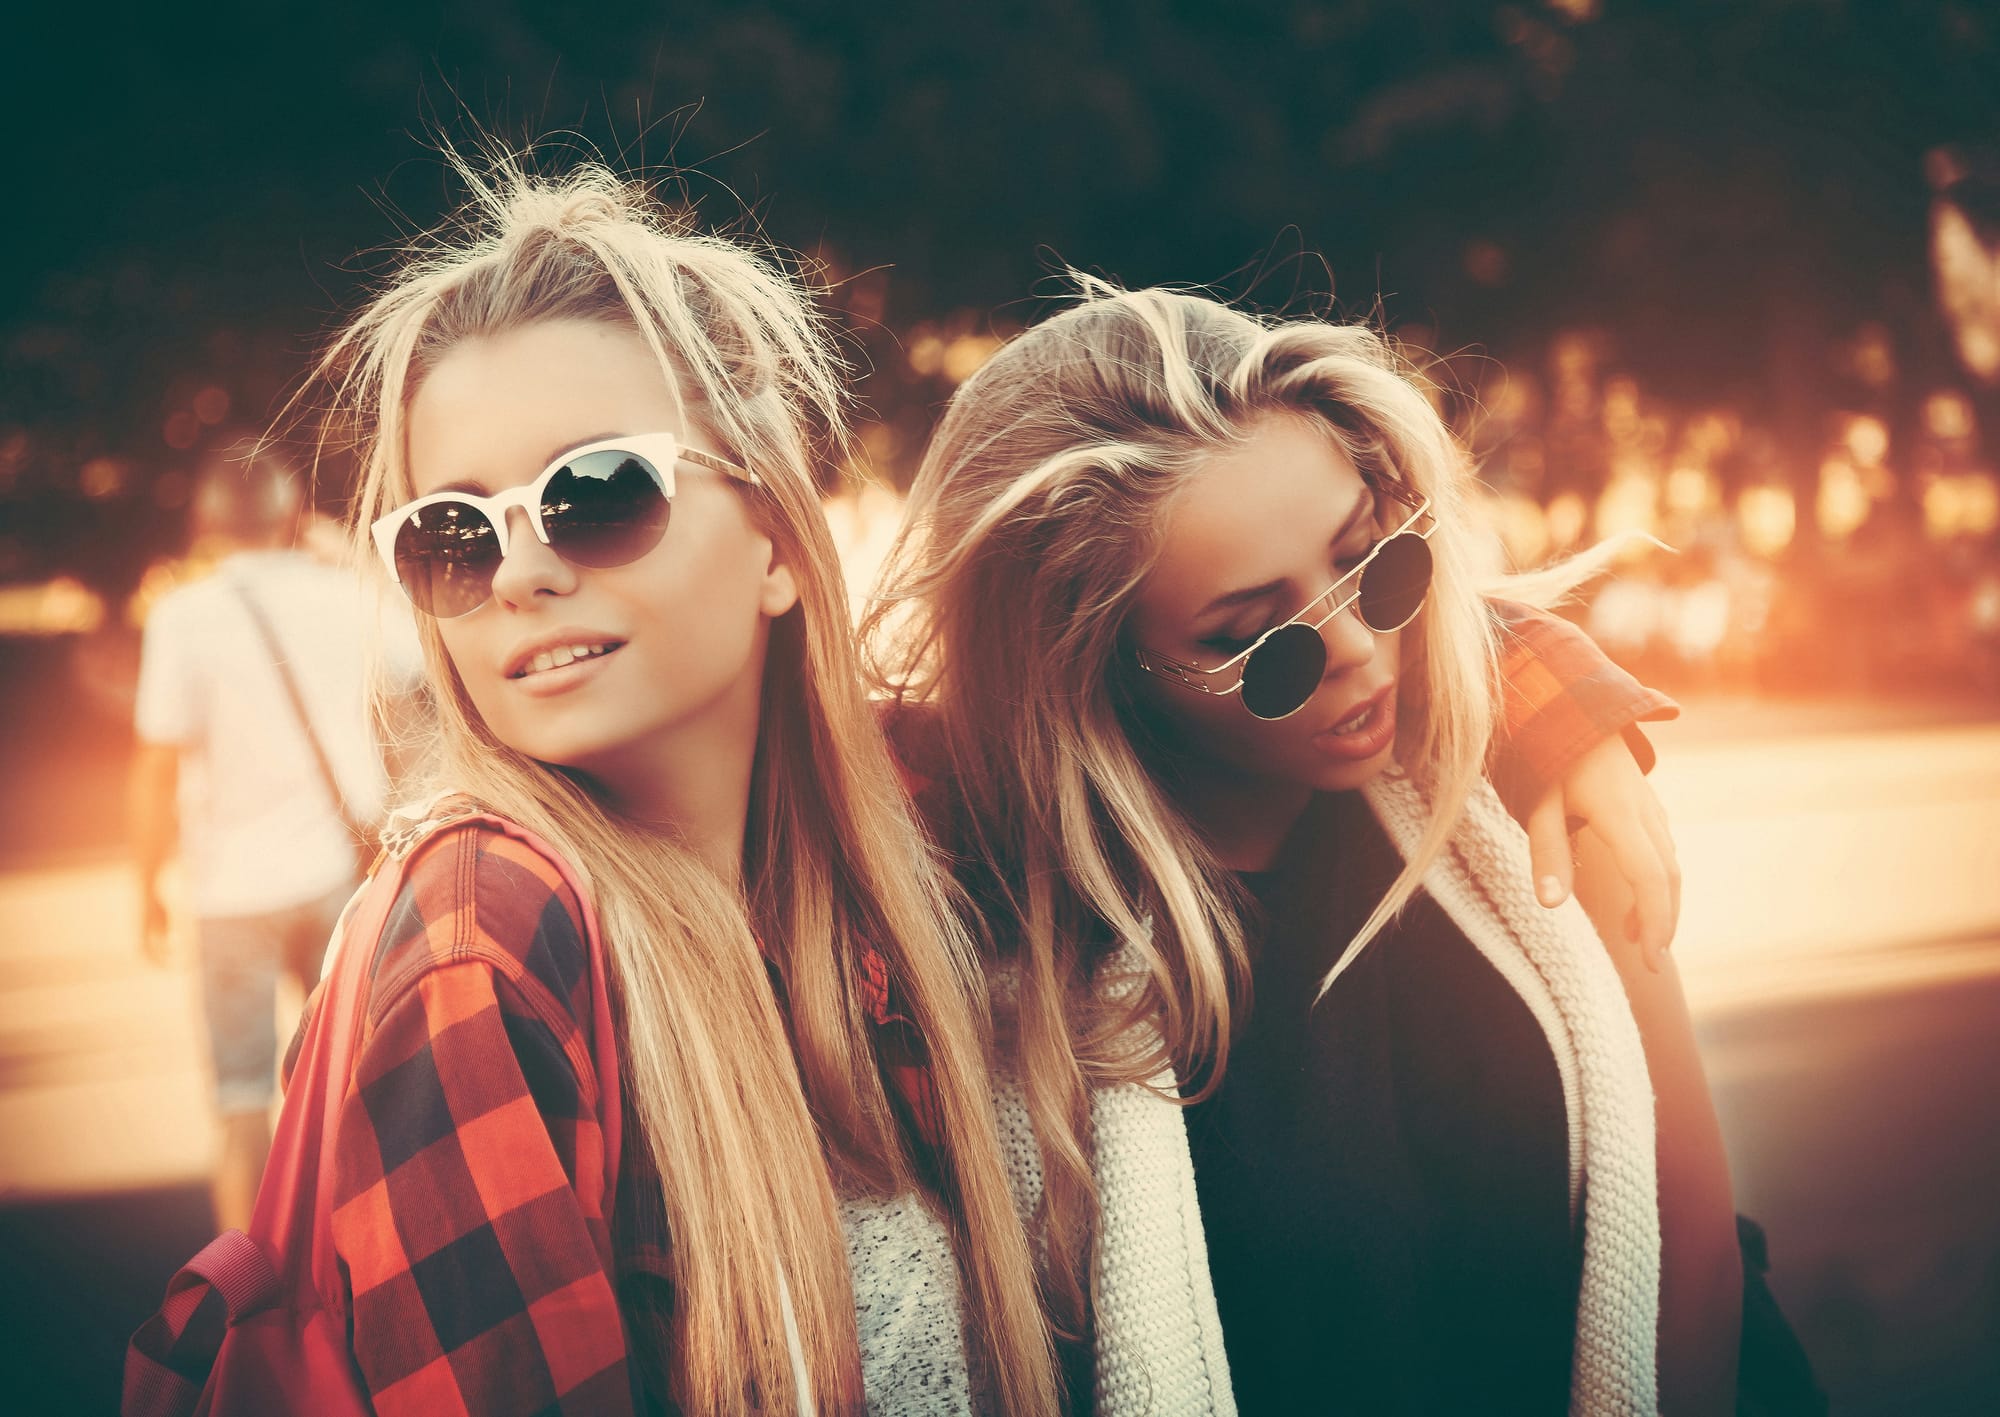 Two girls wearing sunglasses and having fun